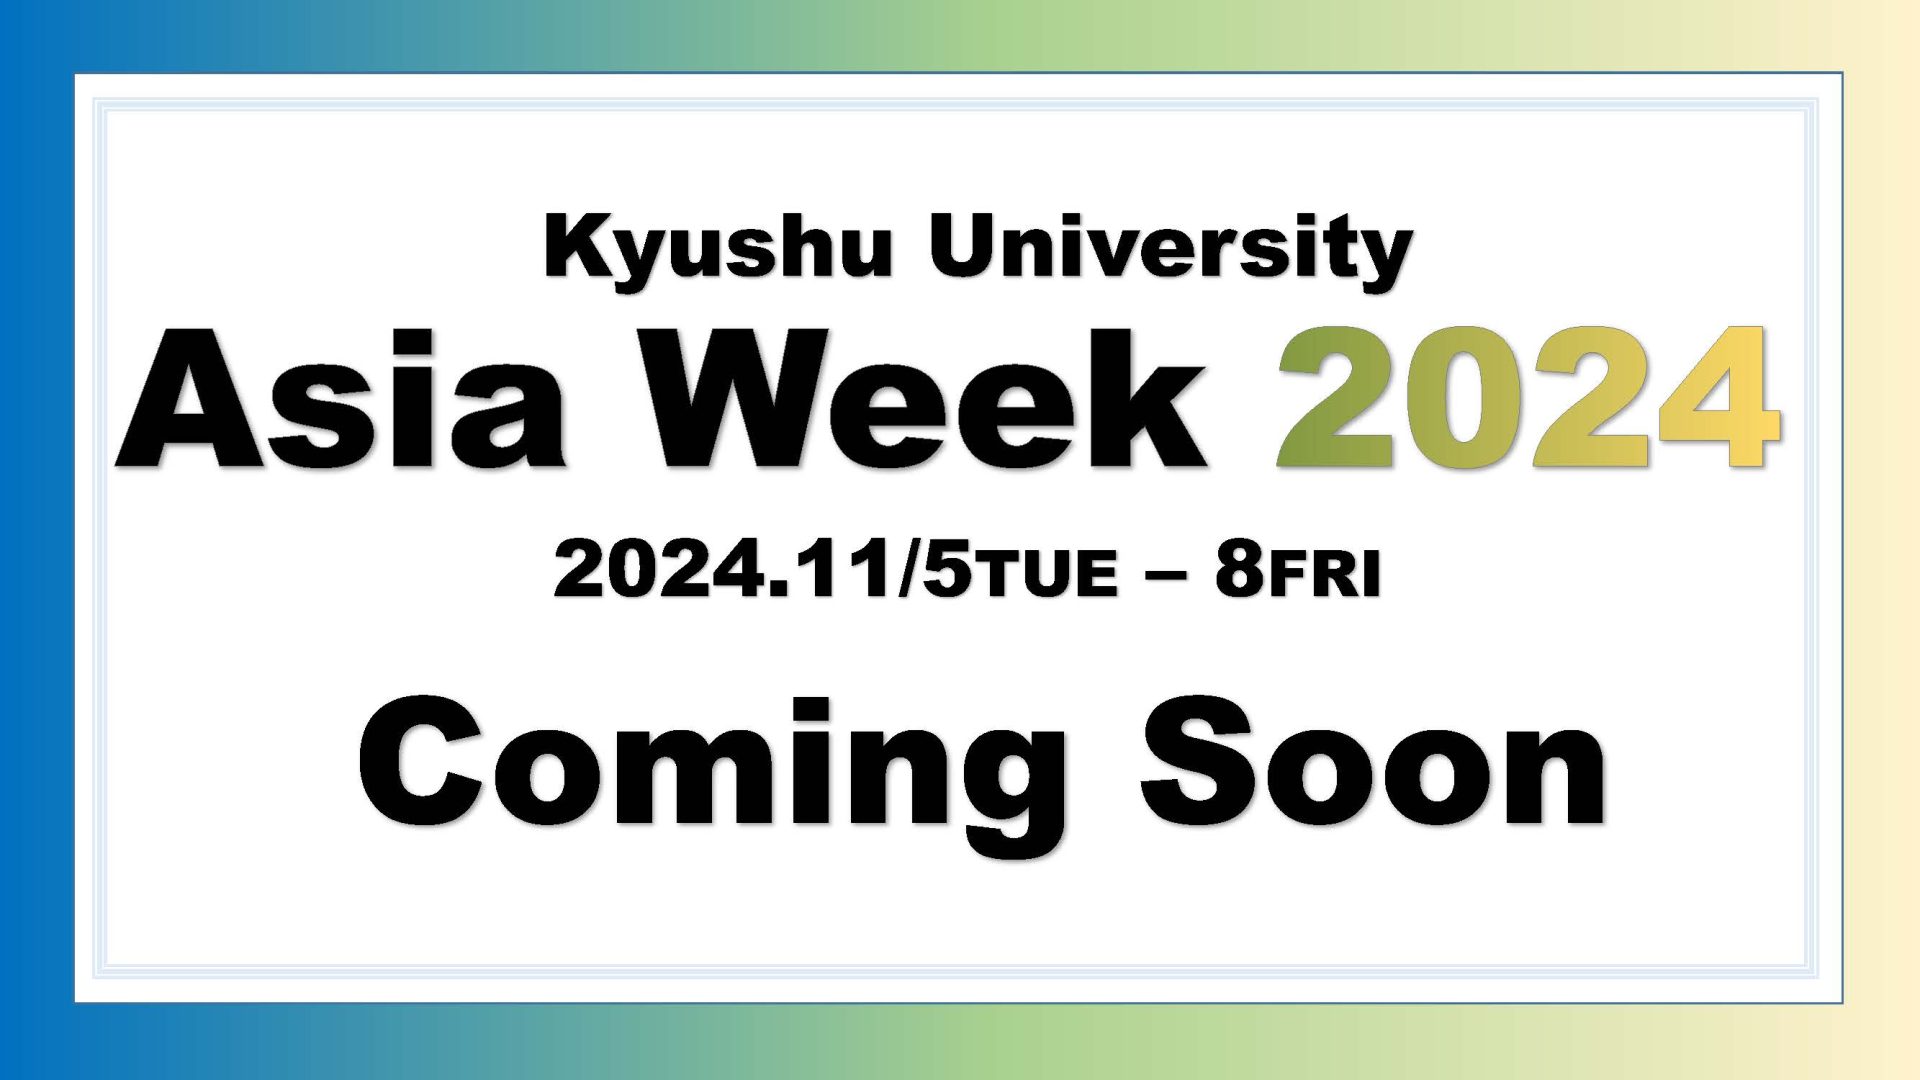 Asia Week 2023